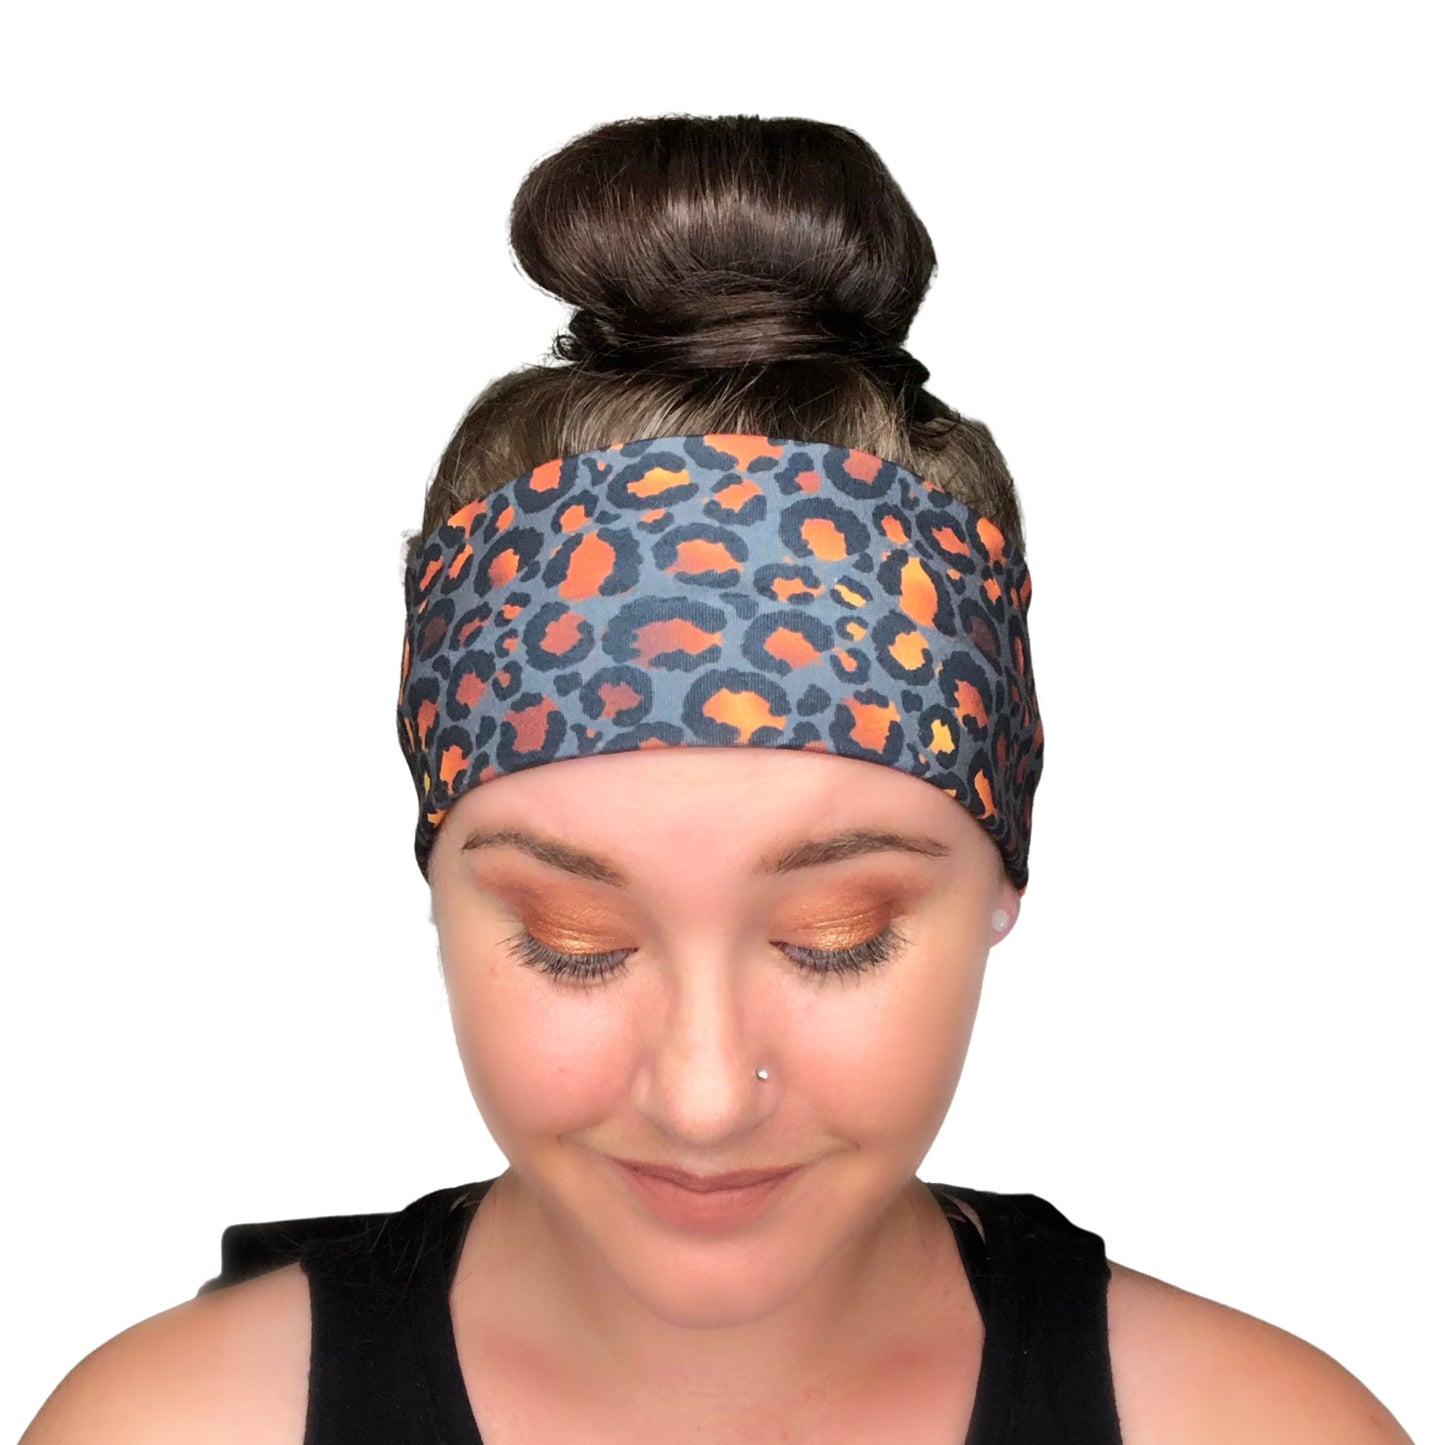 Rose Gold Leopard Print Headband for Women